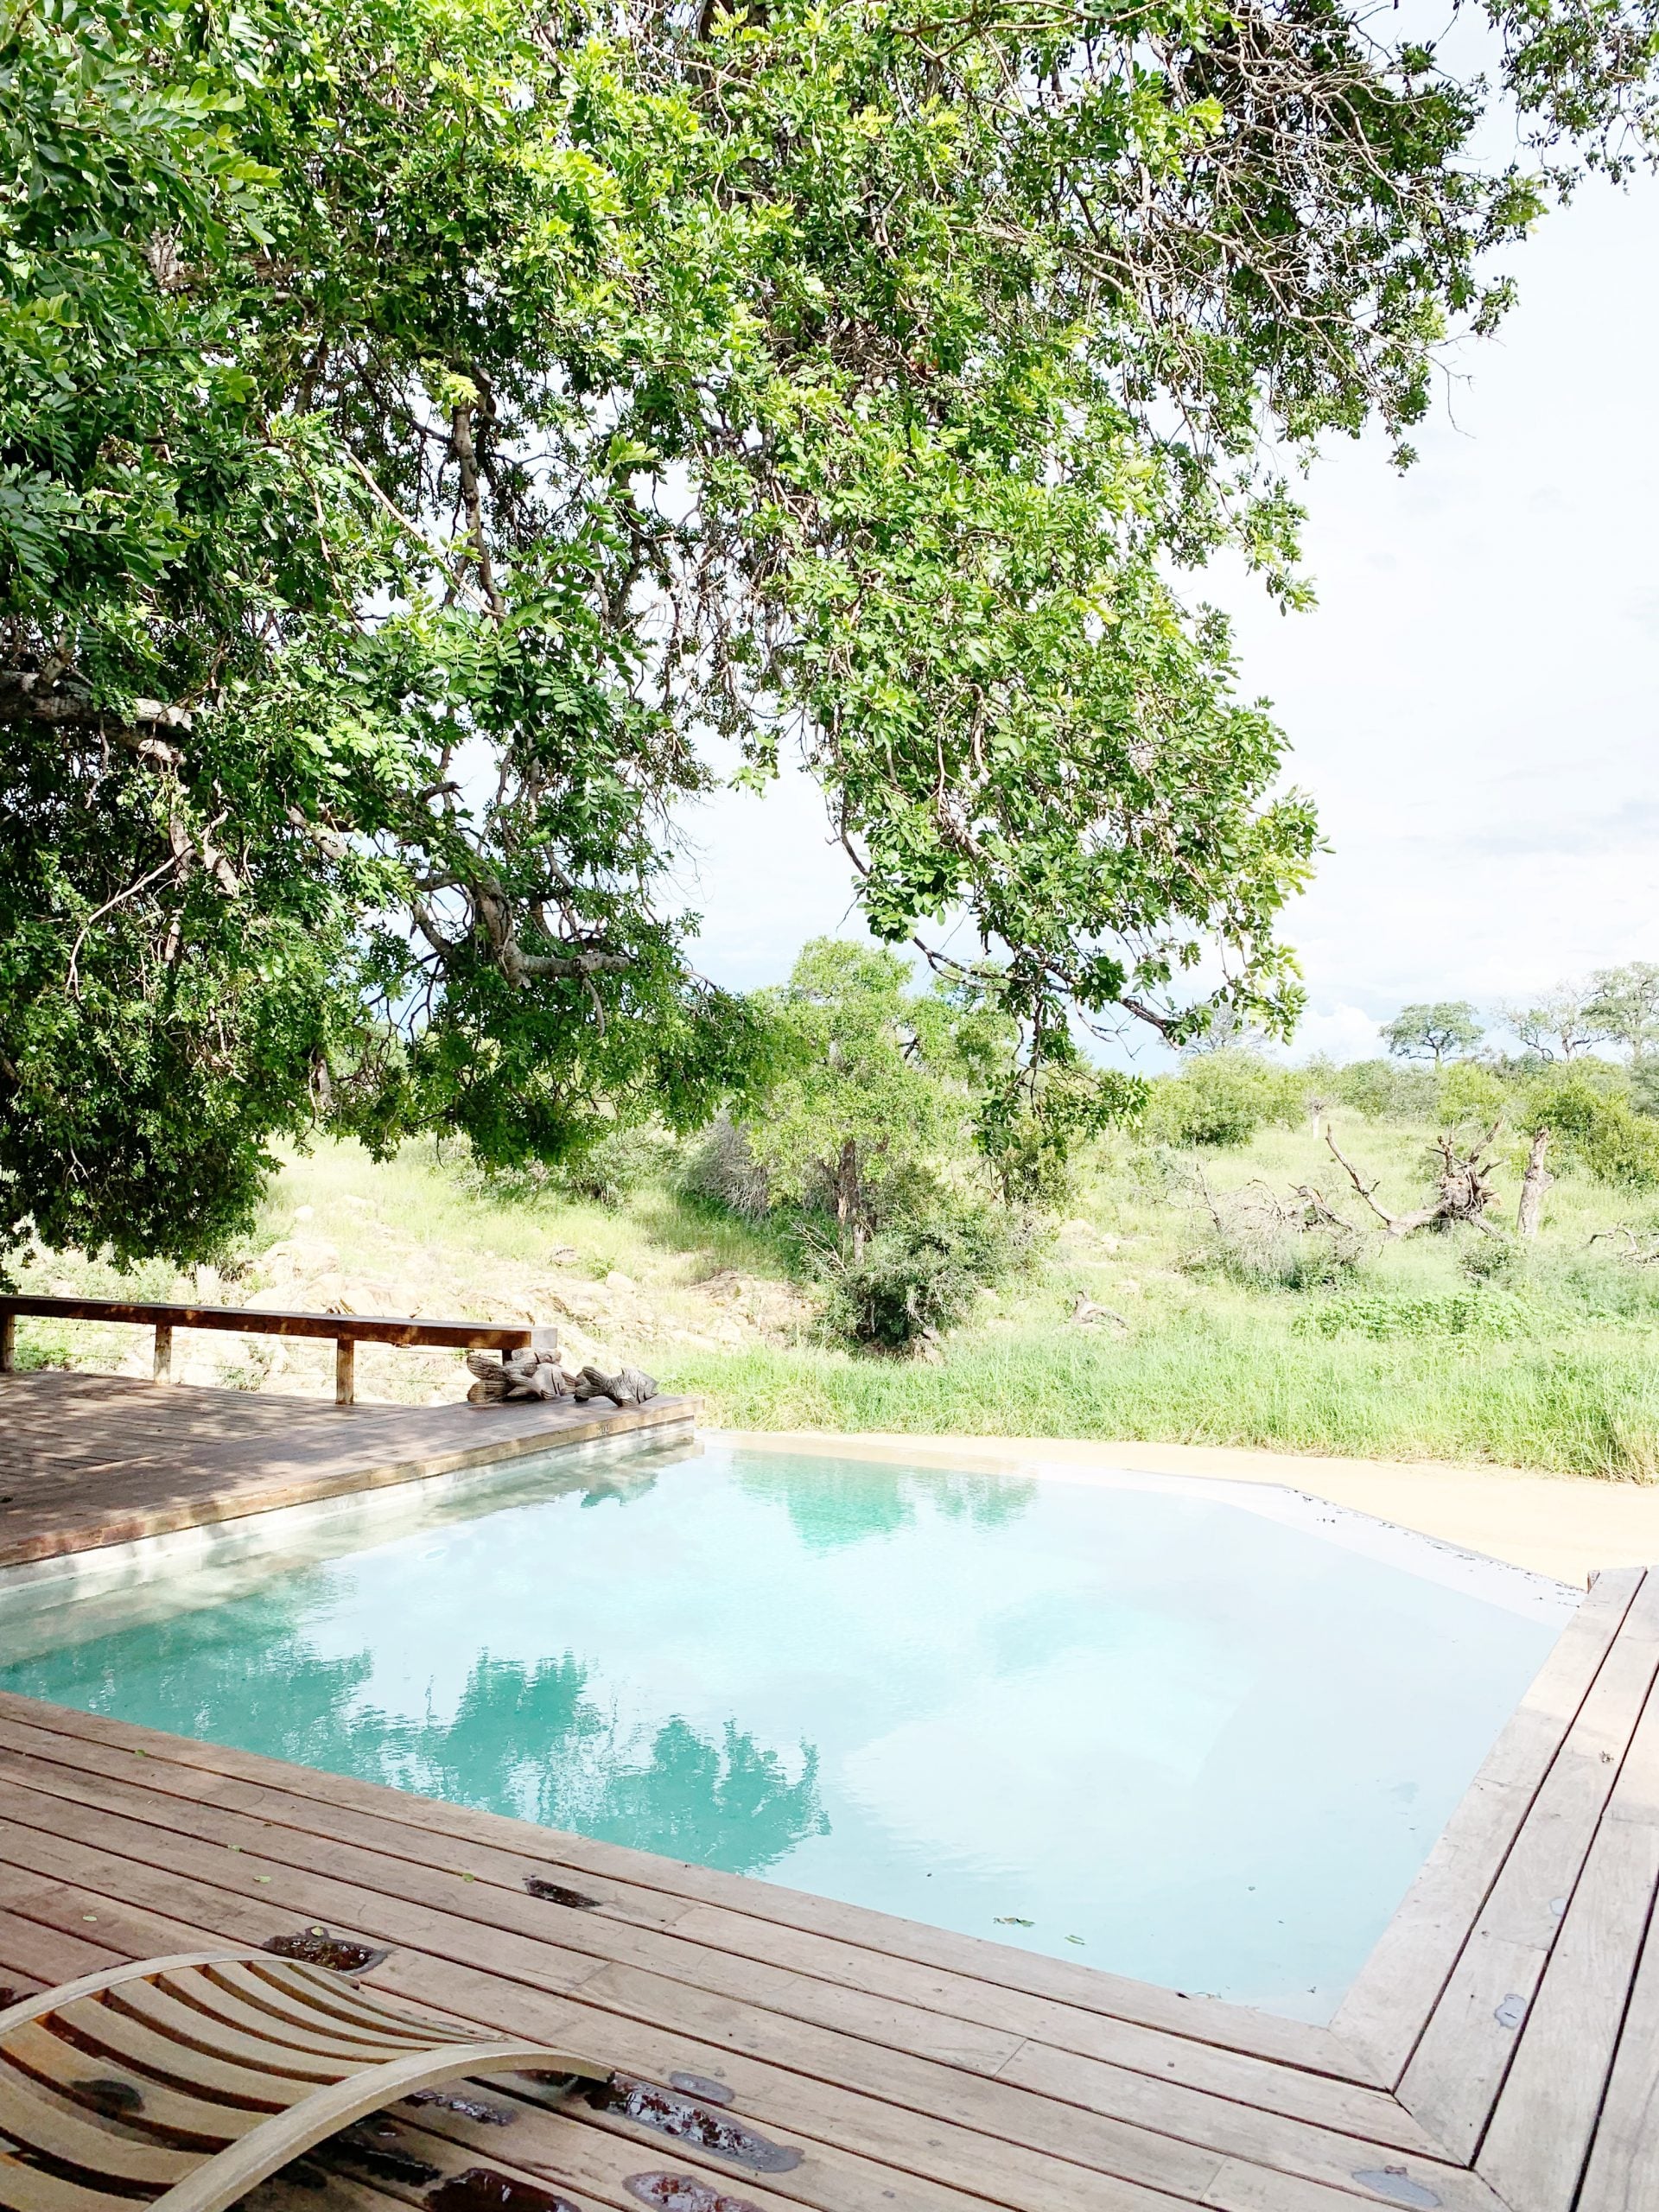 Safari lodge pool